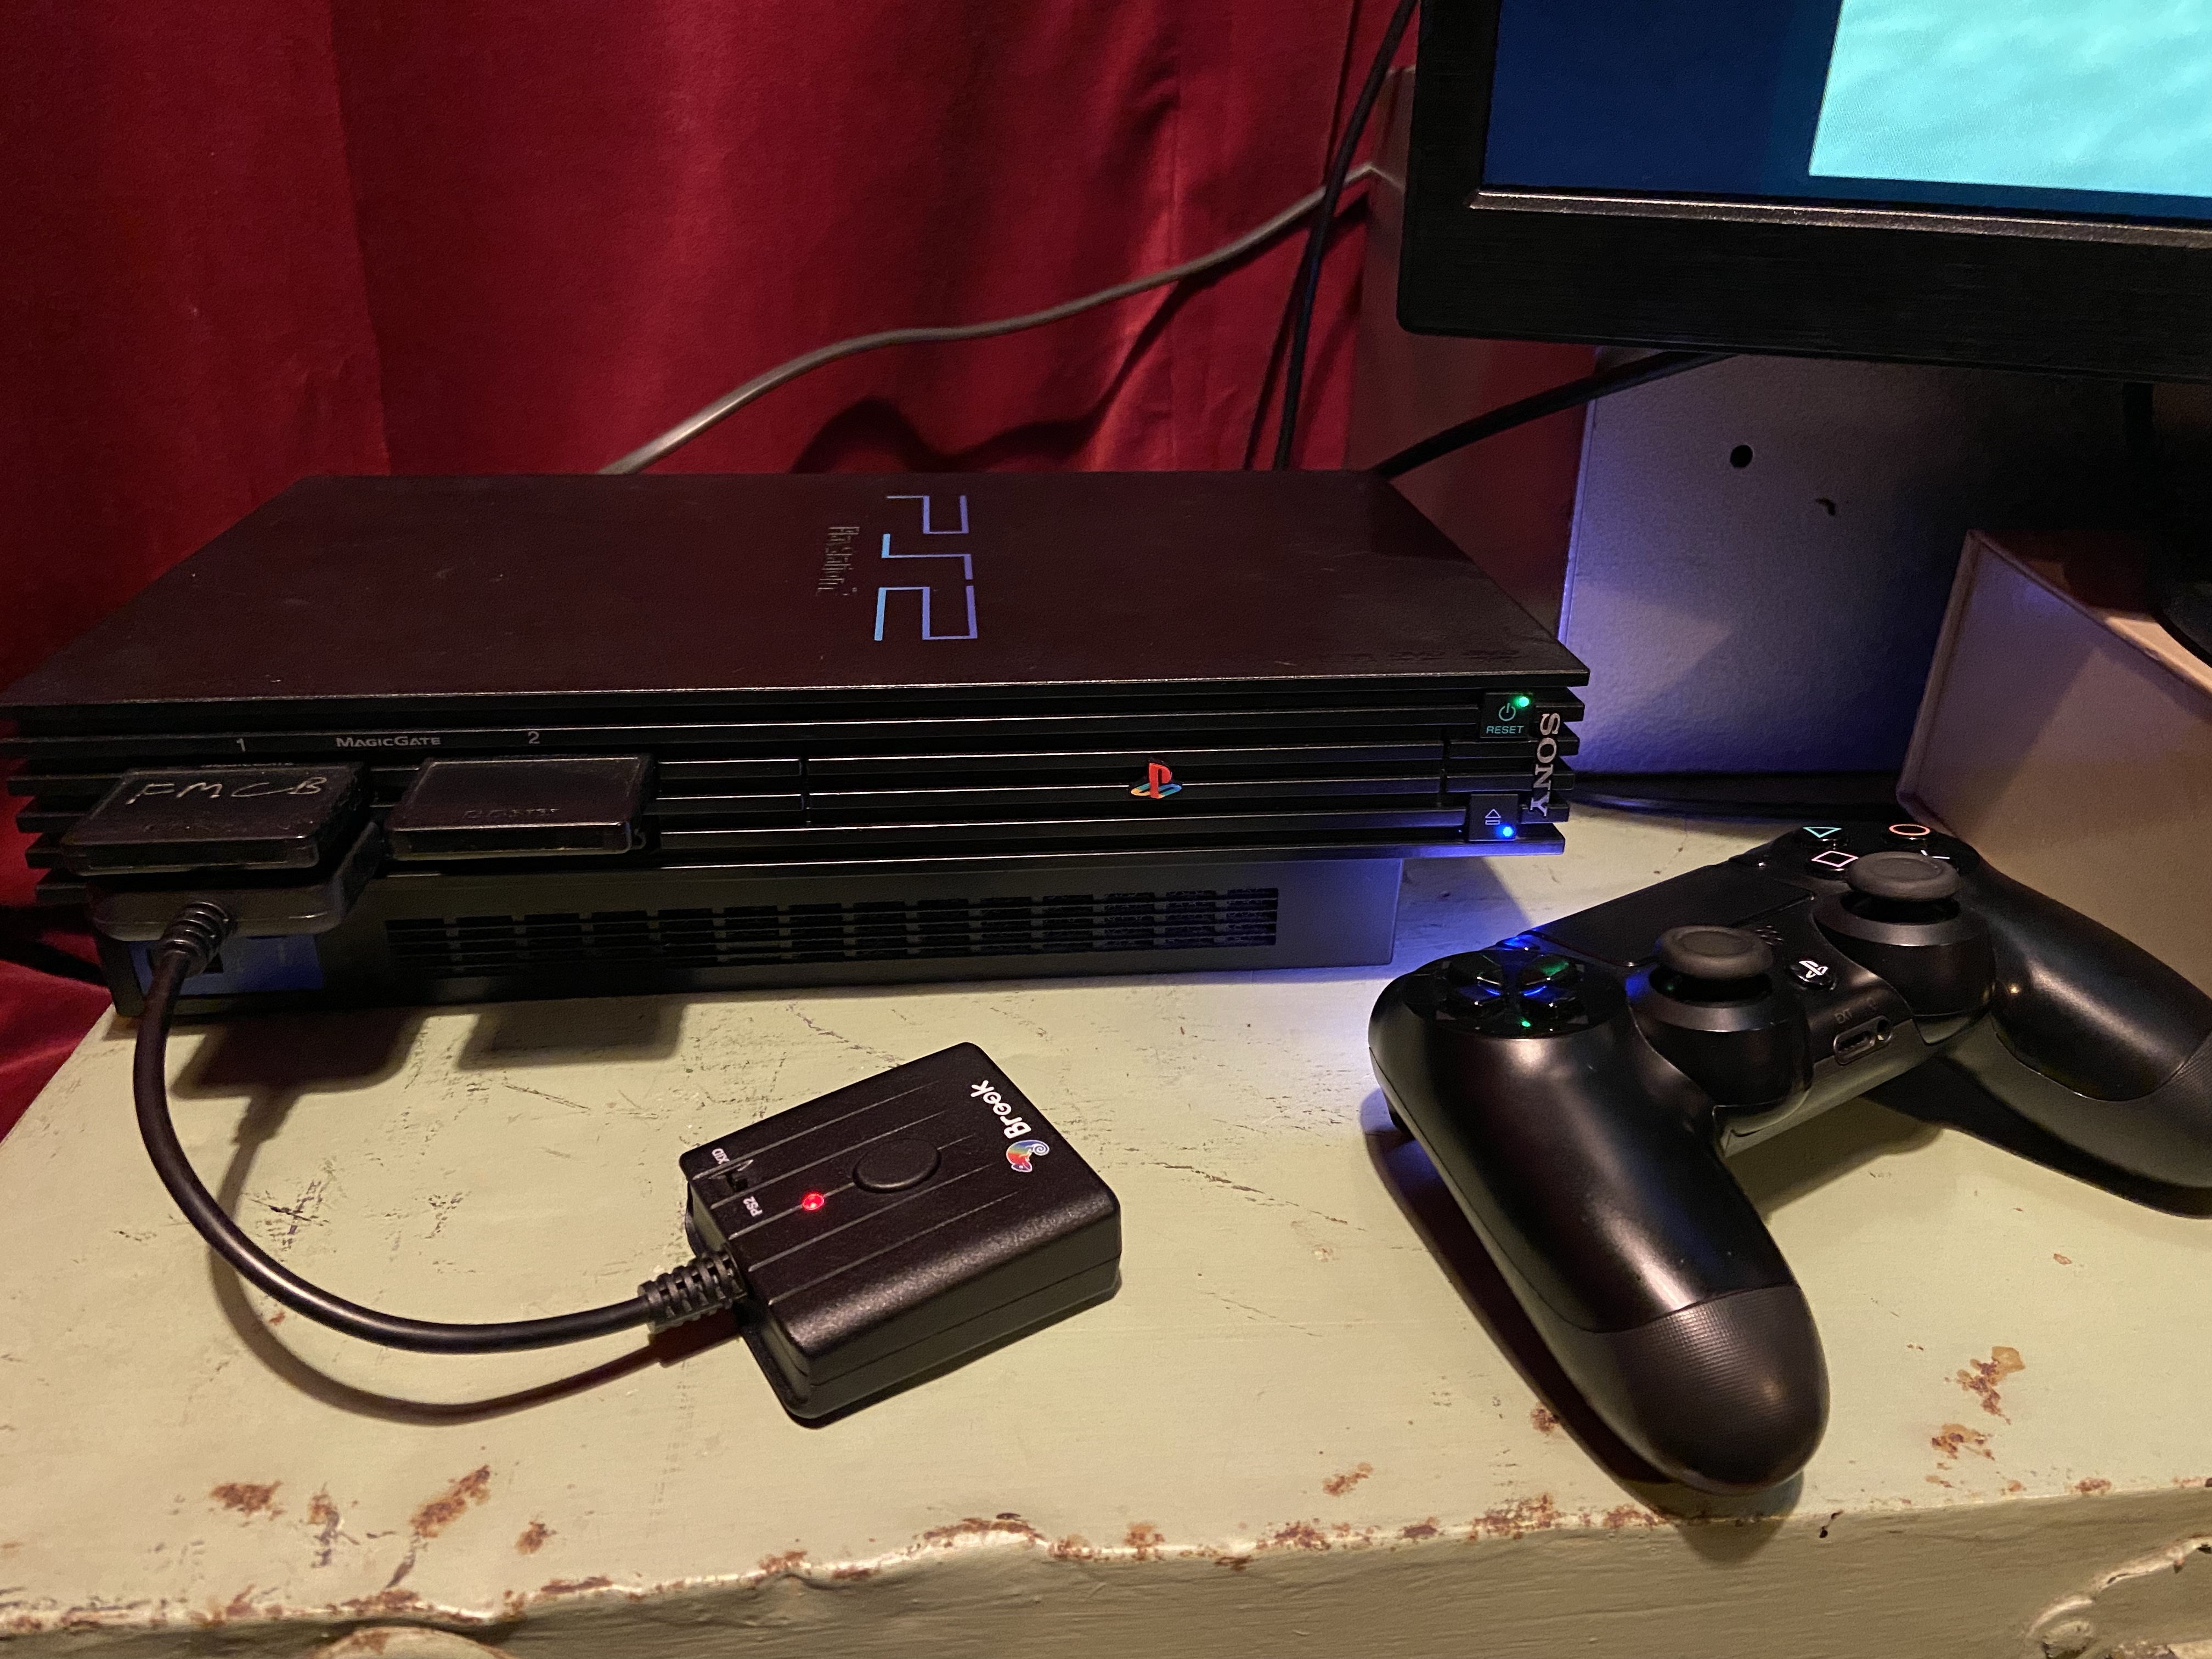 Modded PlayStation 2 using a DualShock 4 via a wireless converter